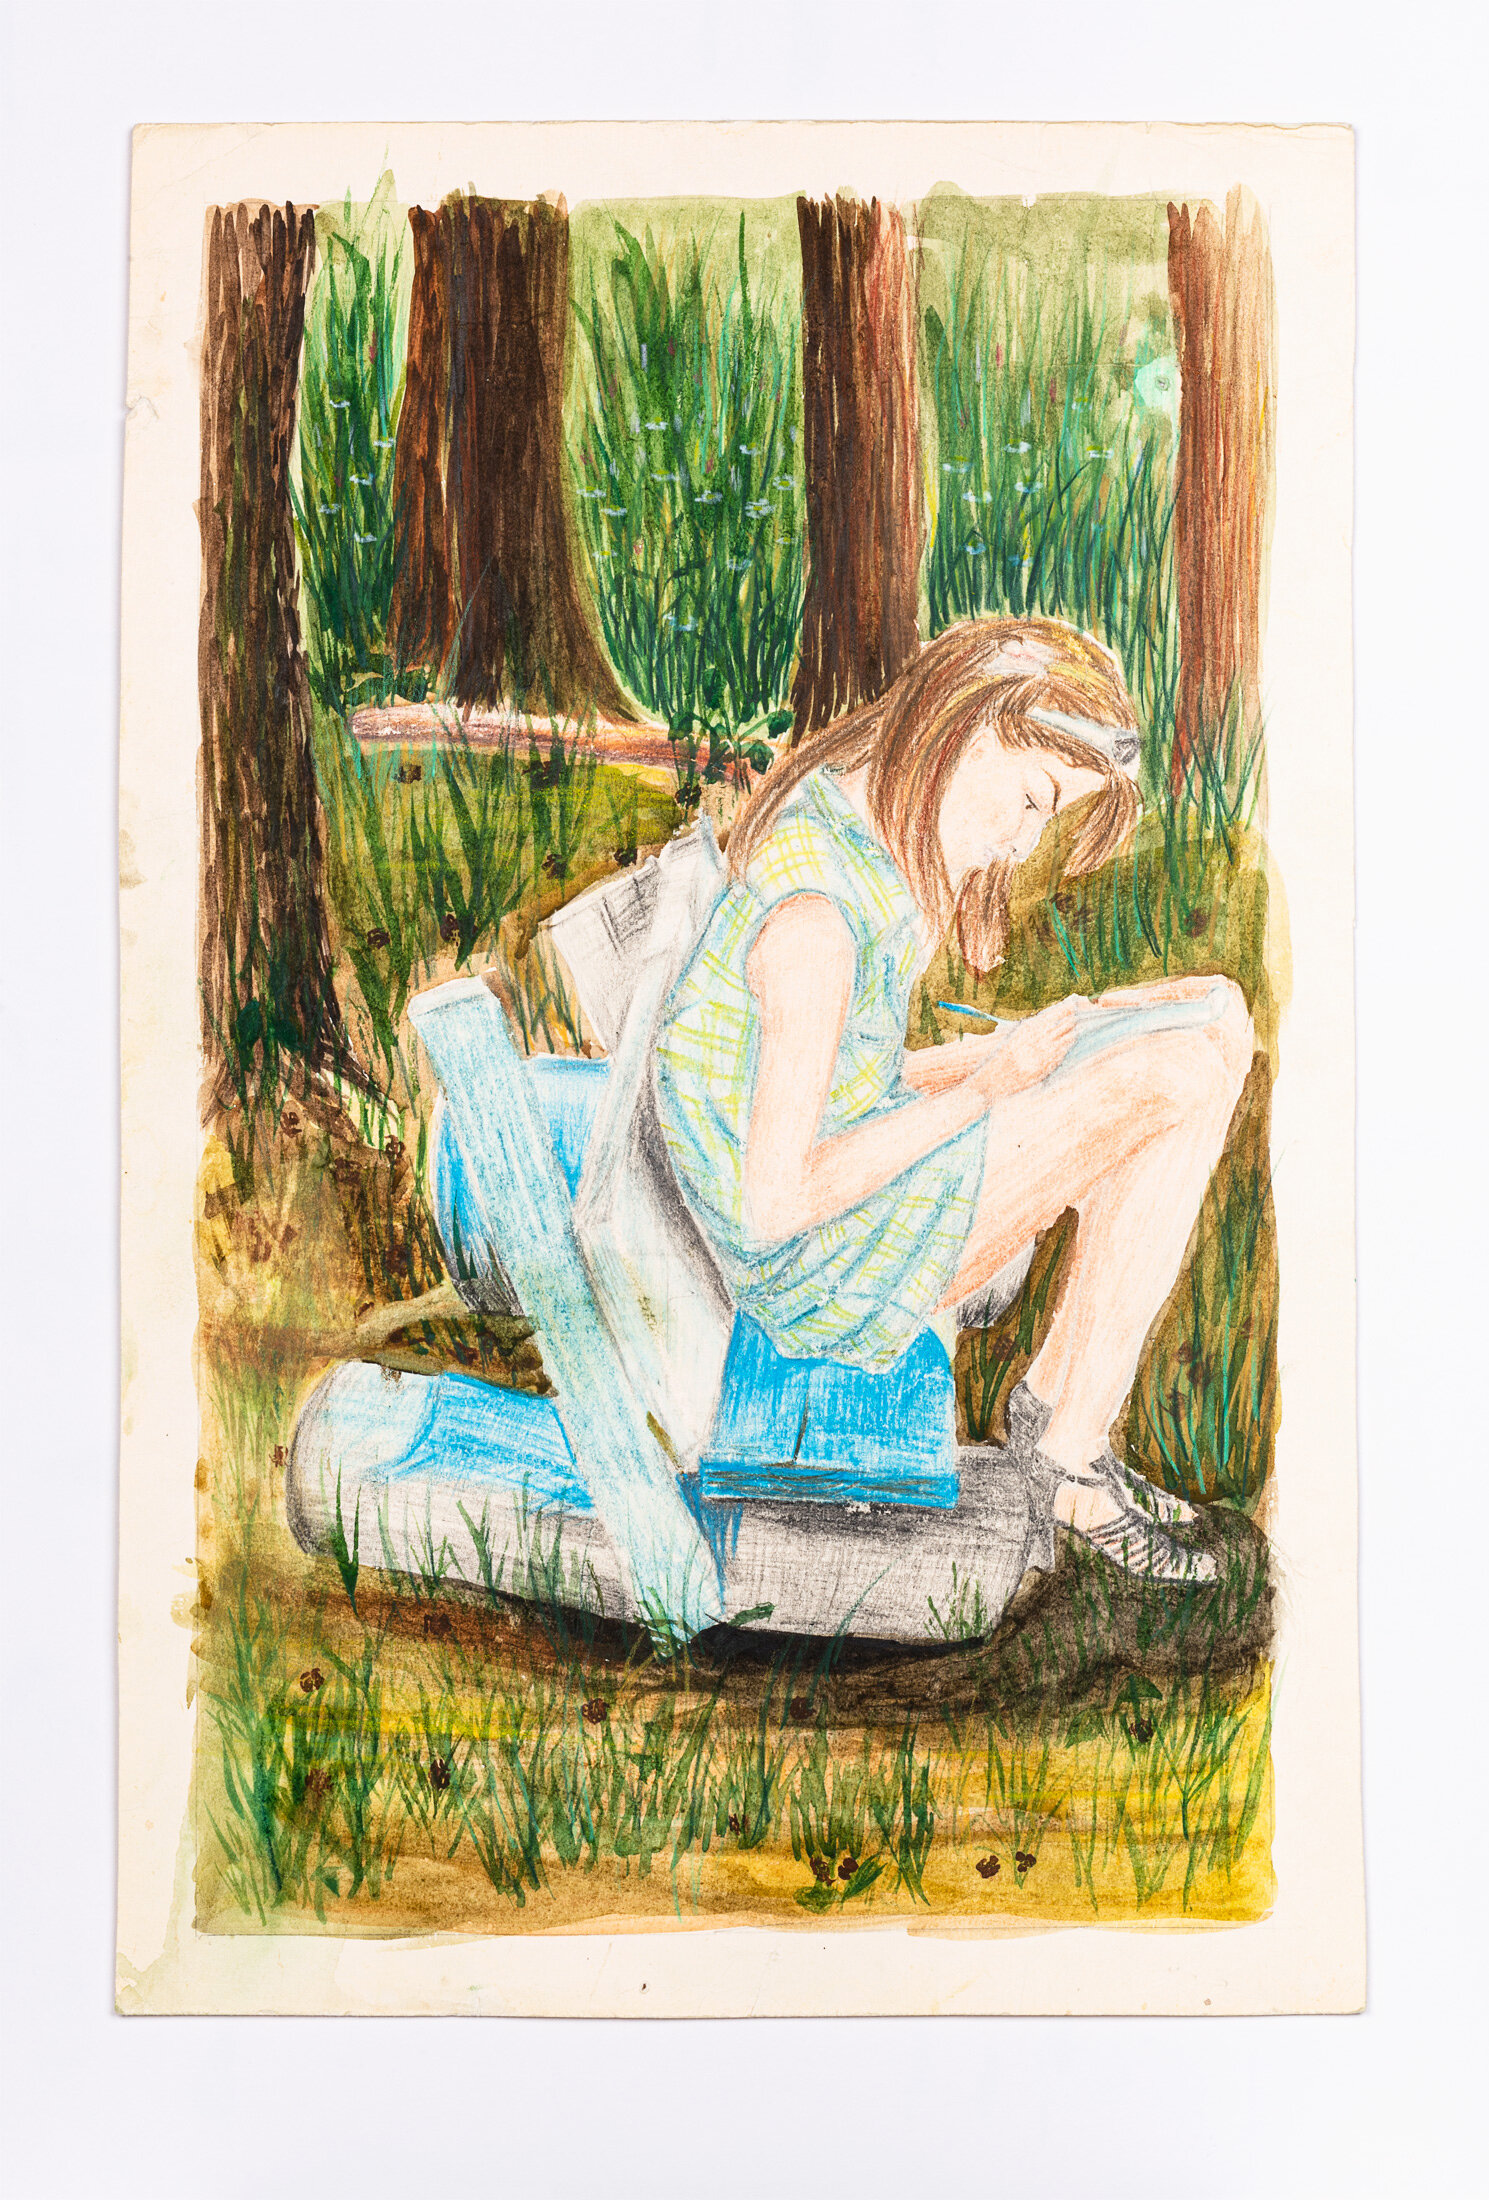 Portrait of Nadya, 1998 - colored pencils, watercolor, gouache on paper